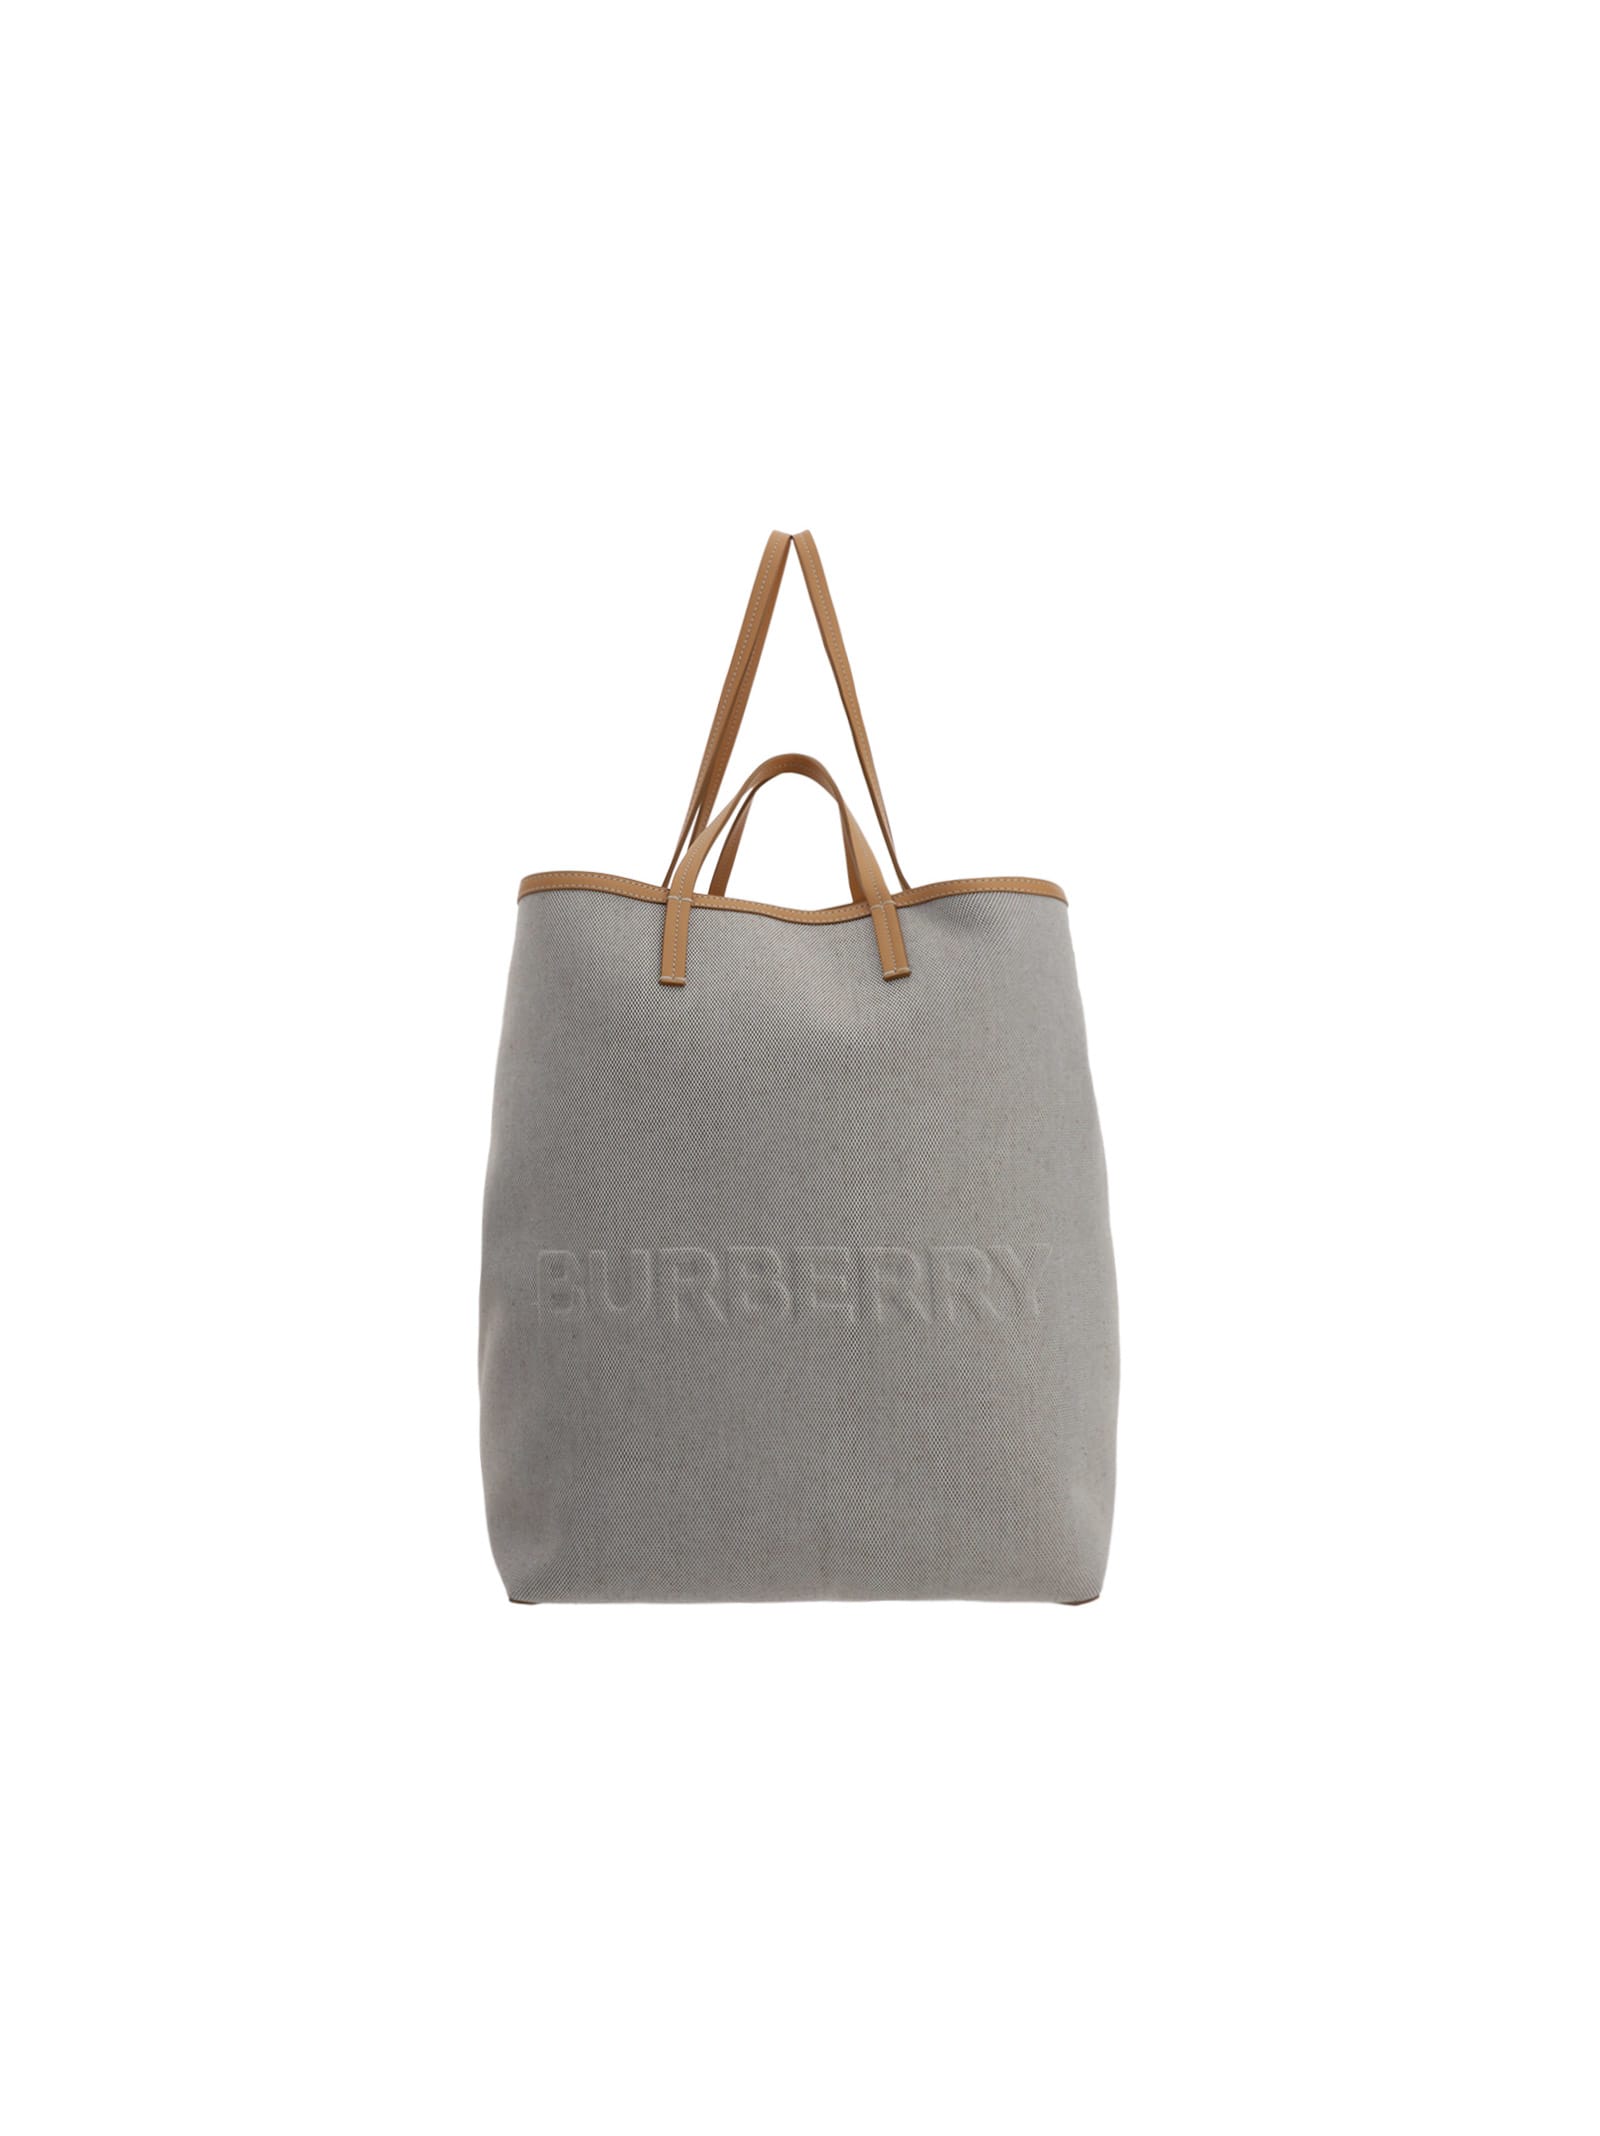 Burberry Beach Tote Bag